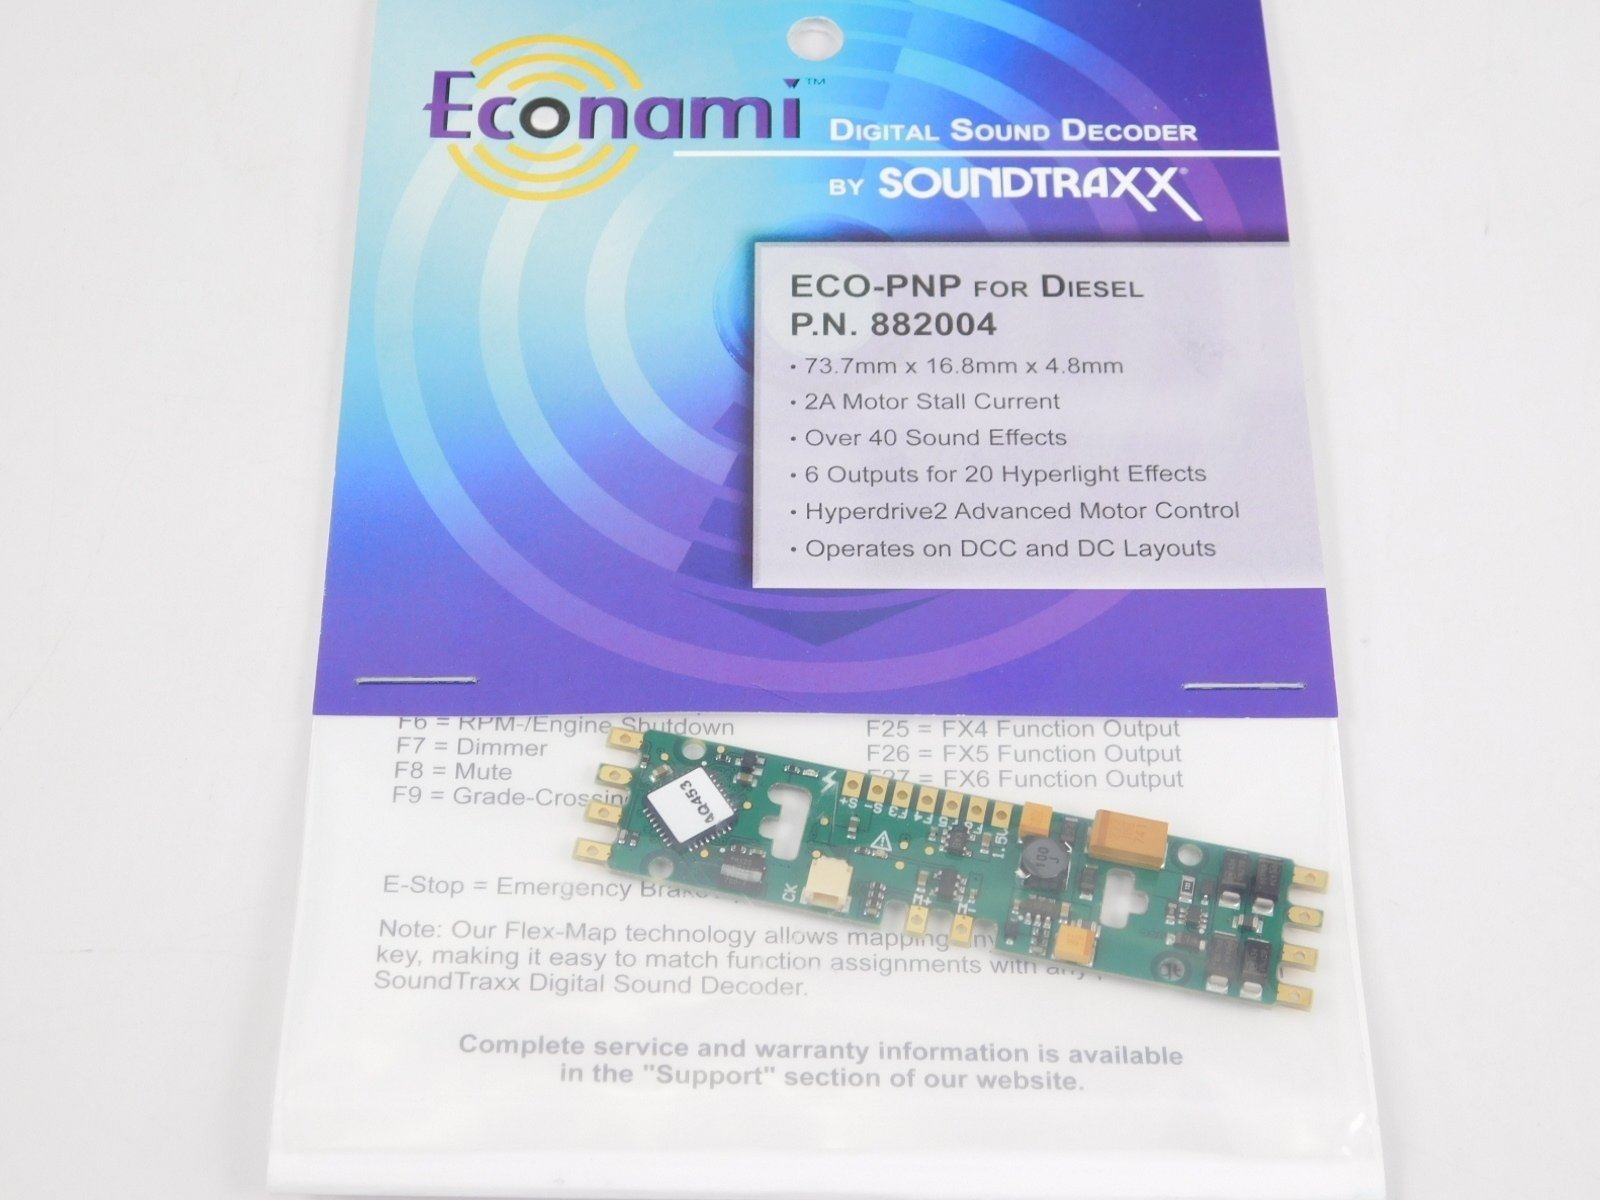 Soundtraxx Econami ECO-PNP 882004 DCC / SOUND Decoder for Diesels 6-Func 2-Amp